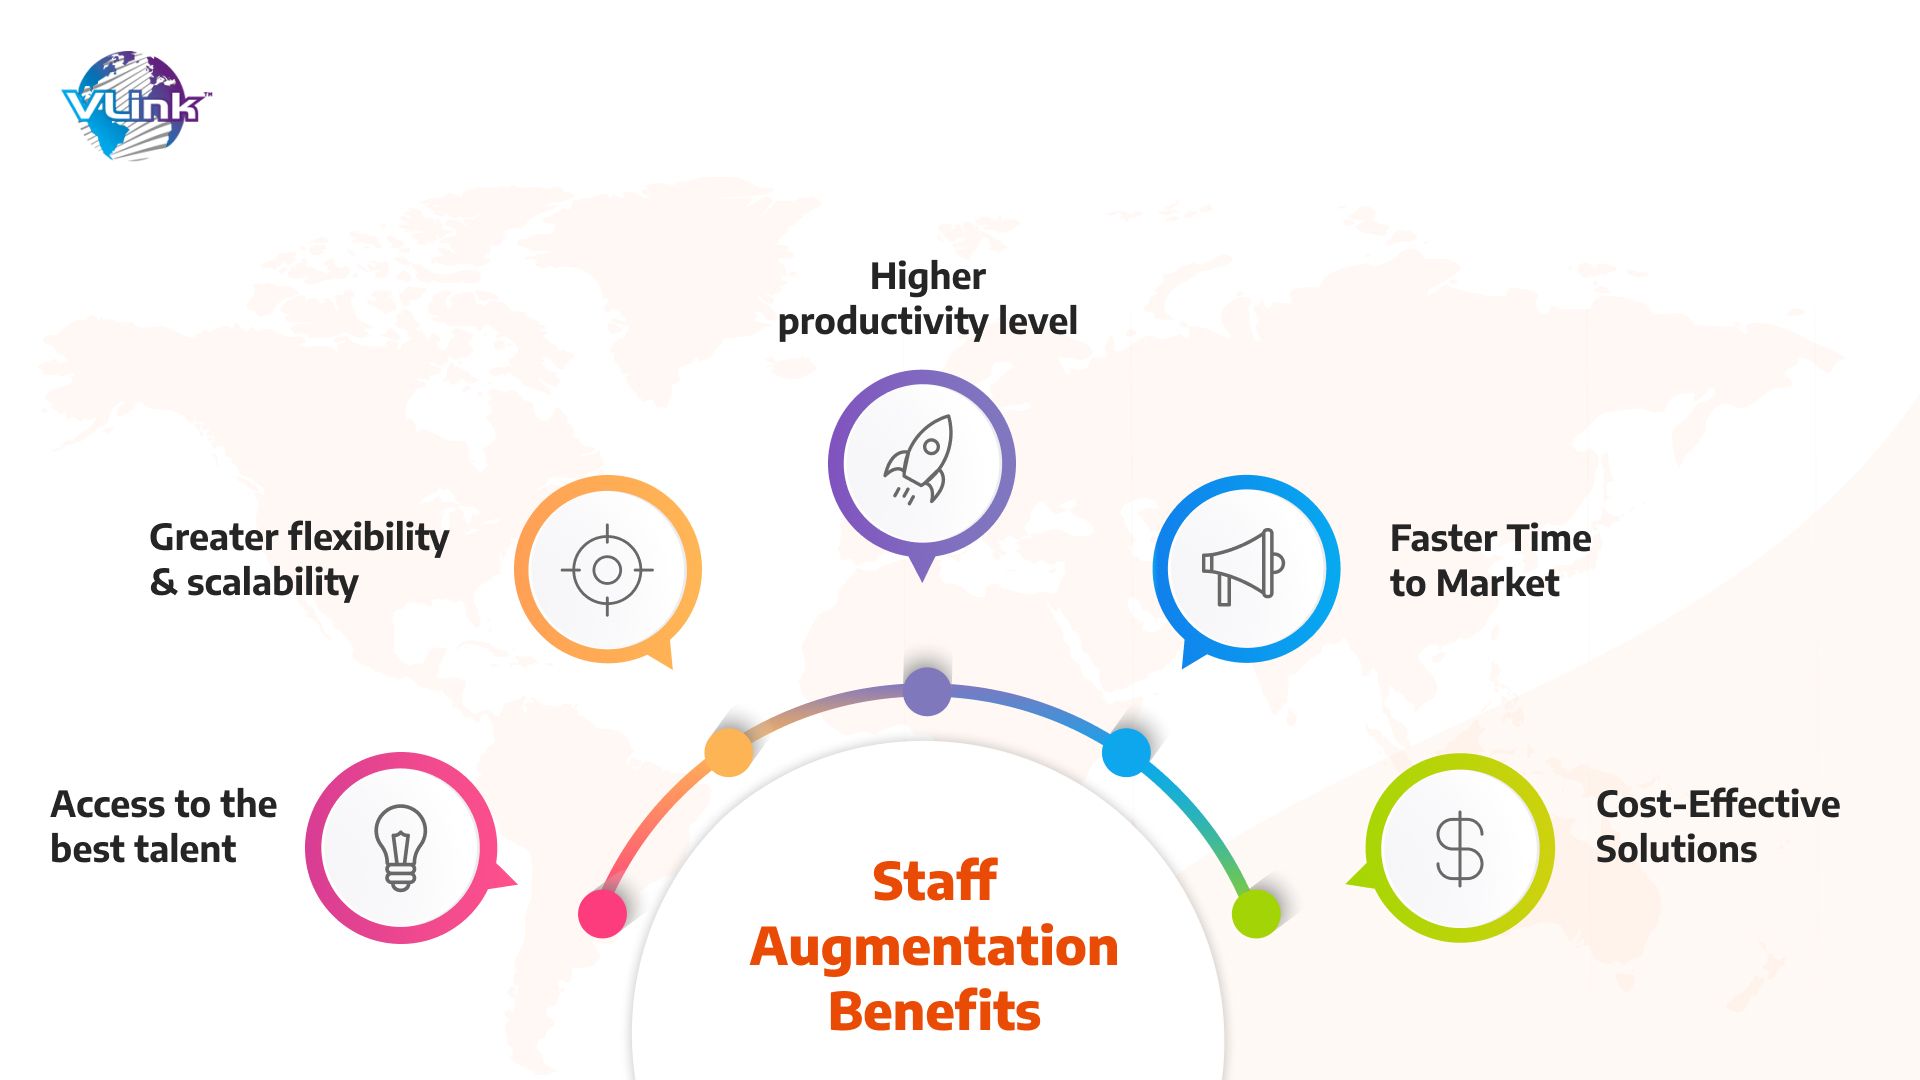 Benefits of IT Staff Augmentation Services